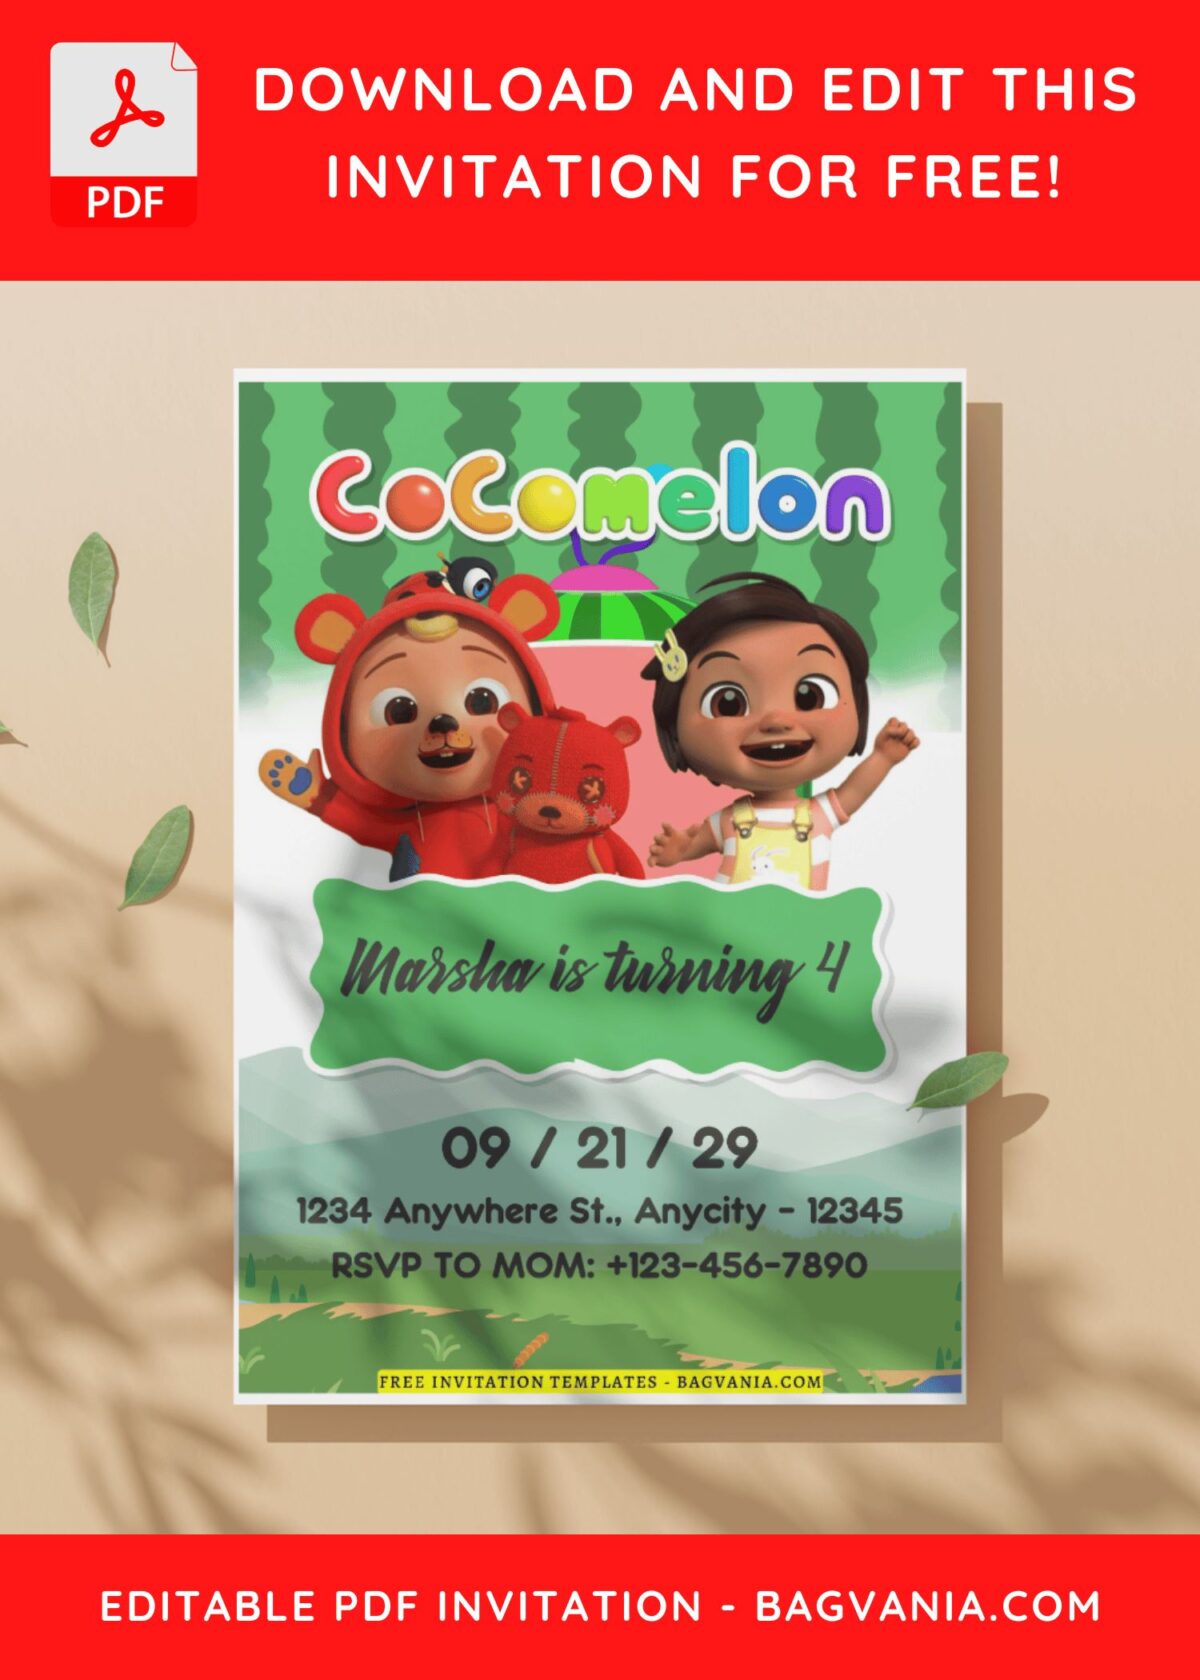 Cocomelon Invitation Templates Guide: Free Designs For Your Party! B